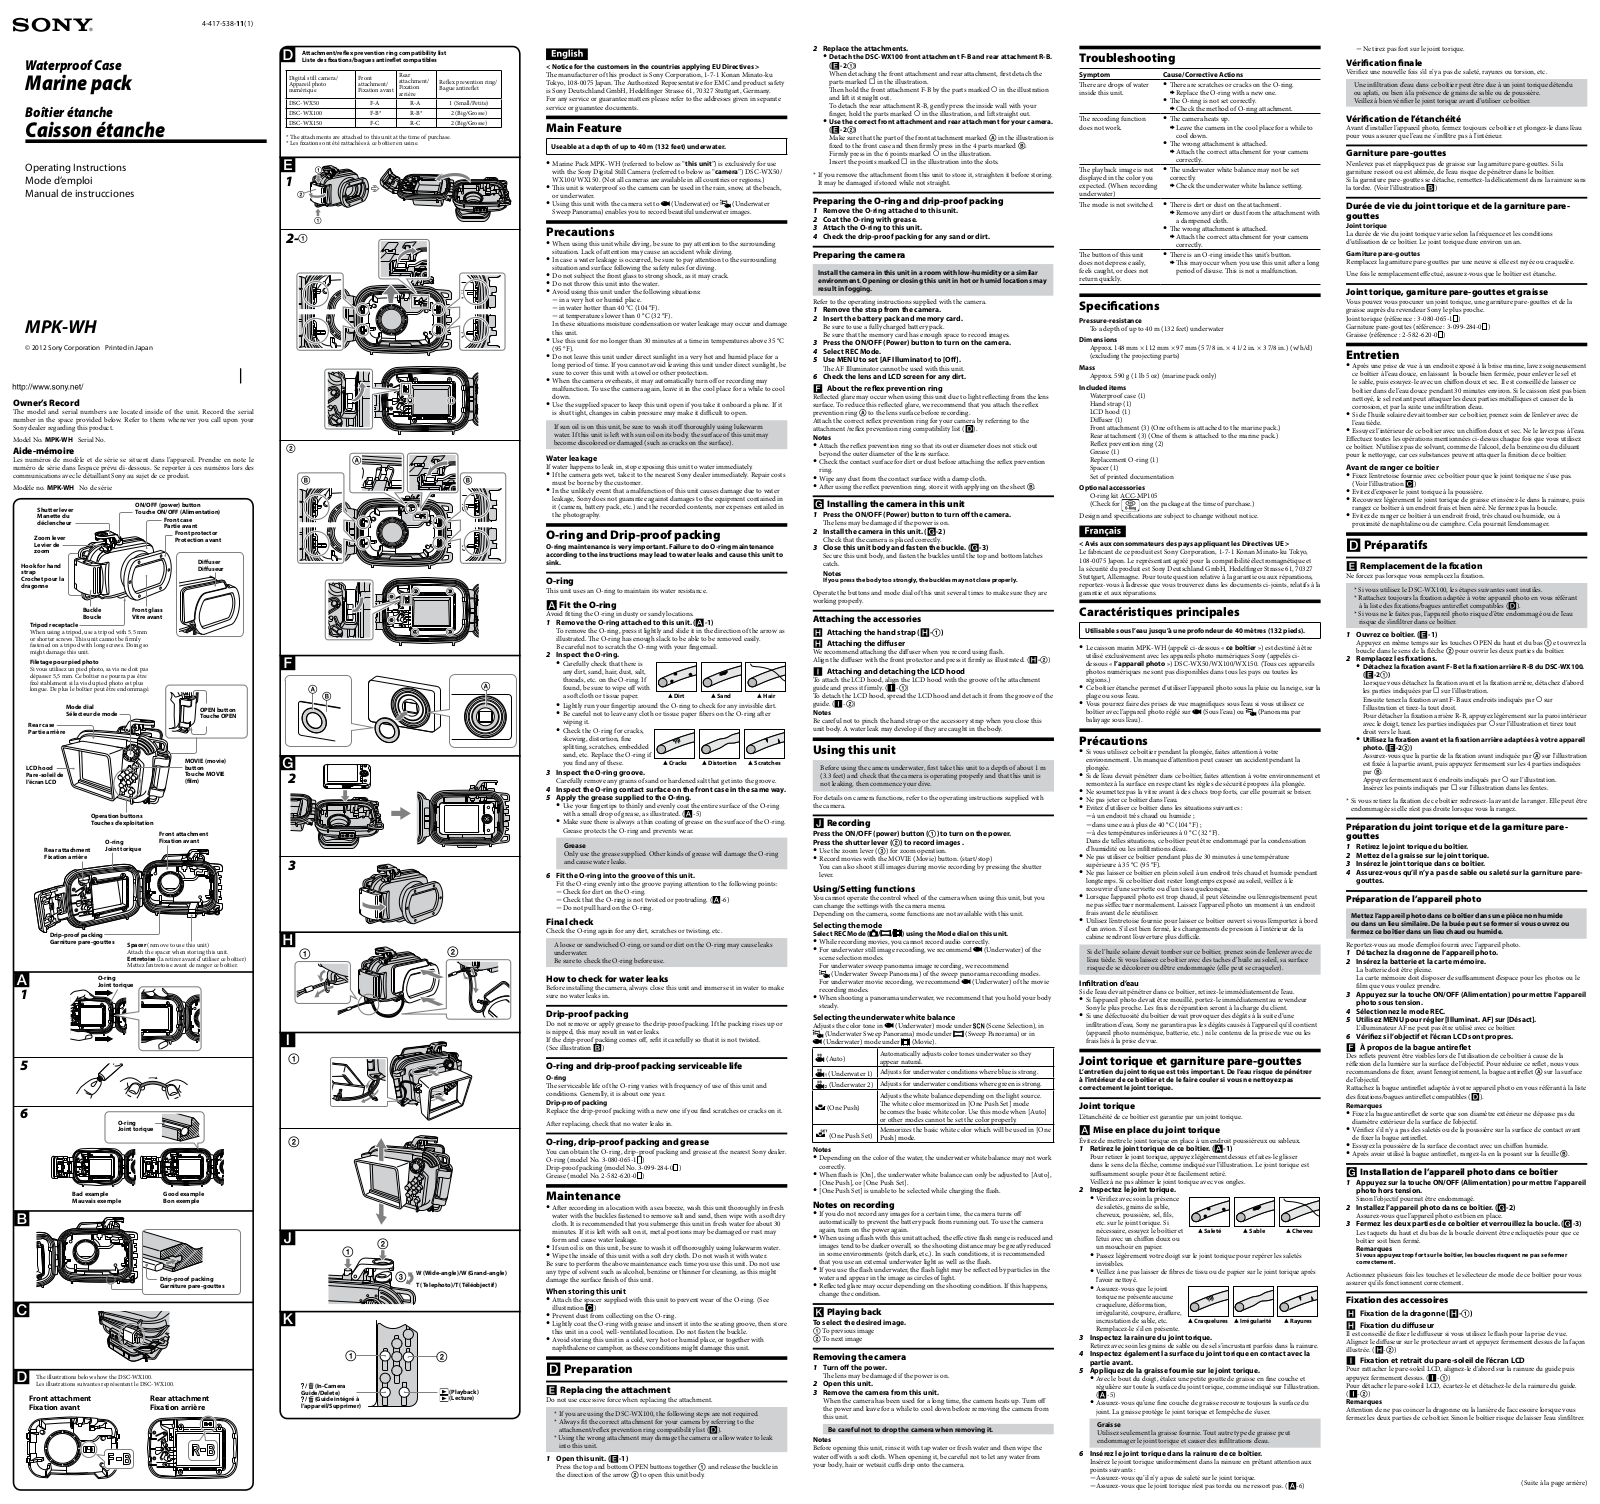 Sony MPK-WH User Manual